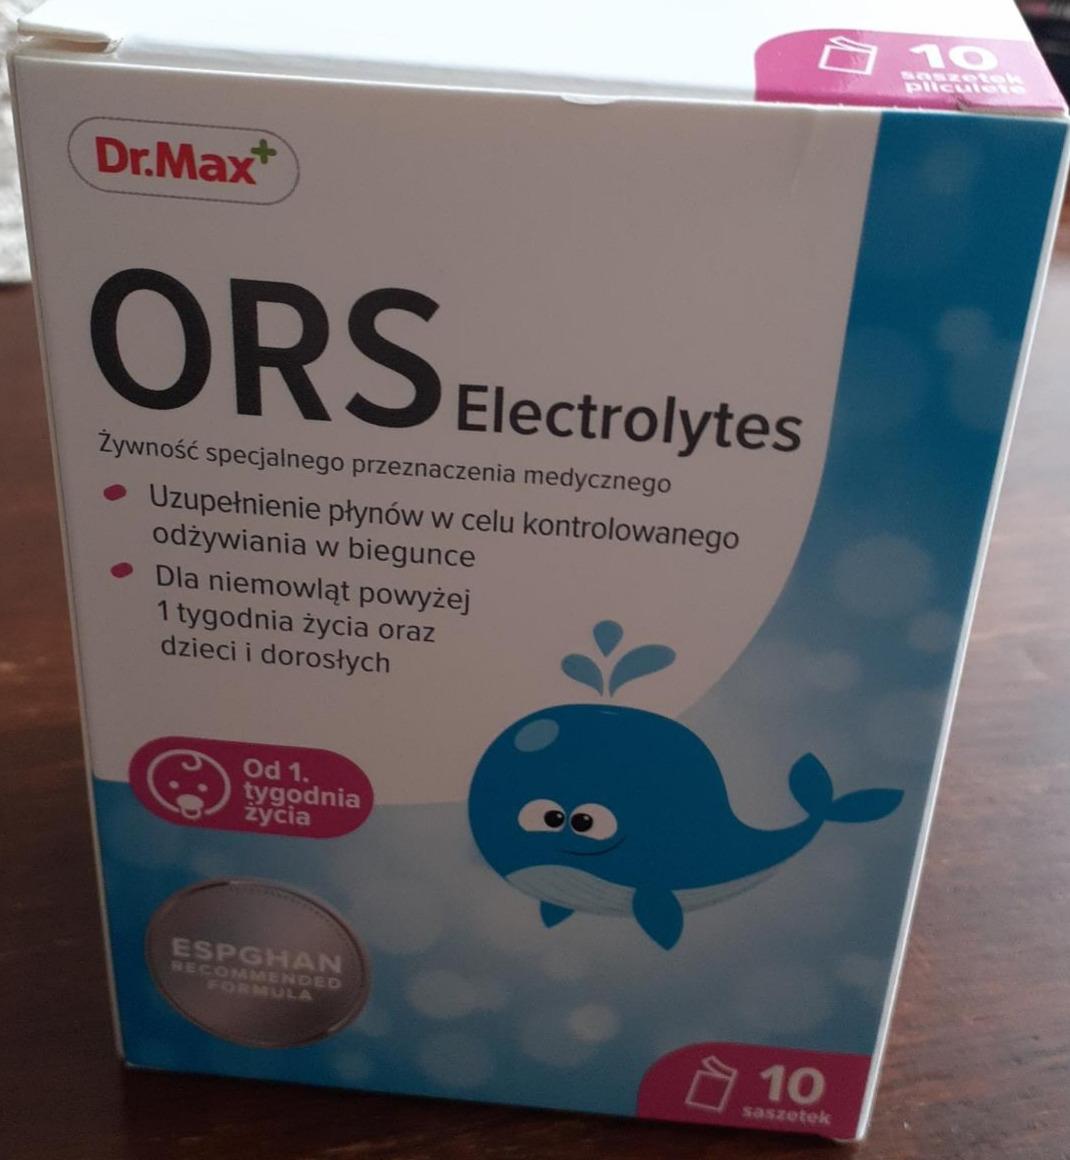 Zdjęcia - ORS Electrolytes Dr.Max